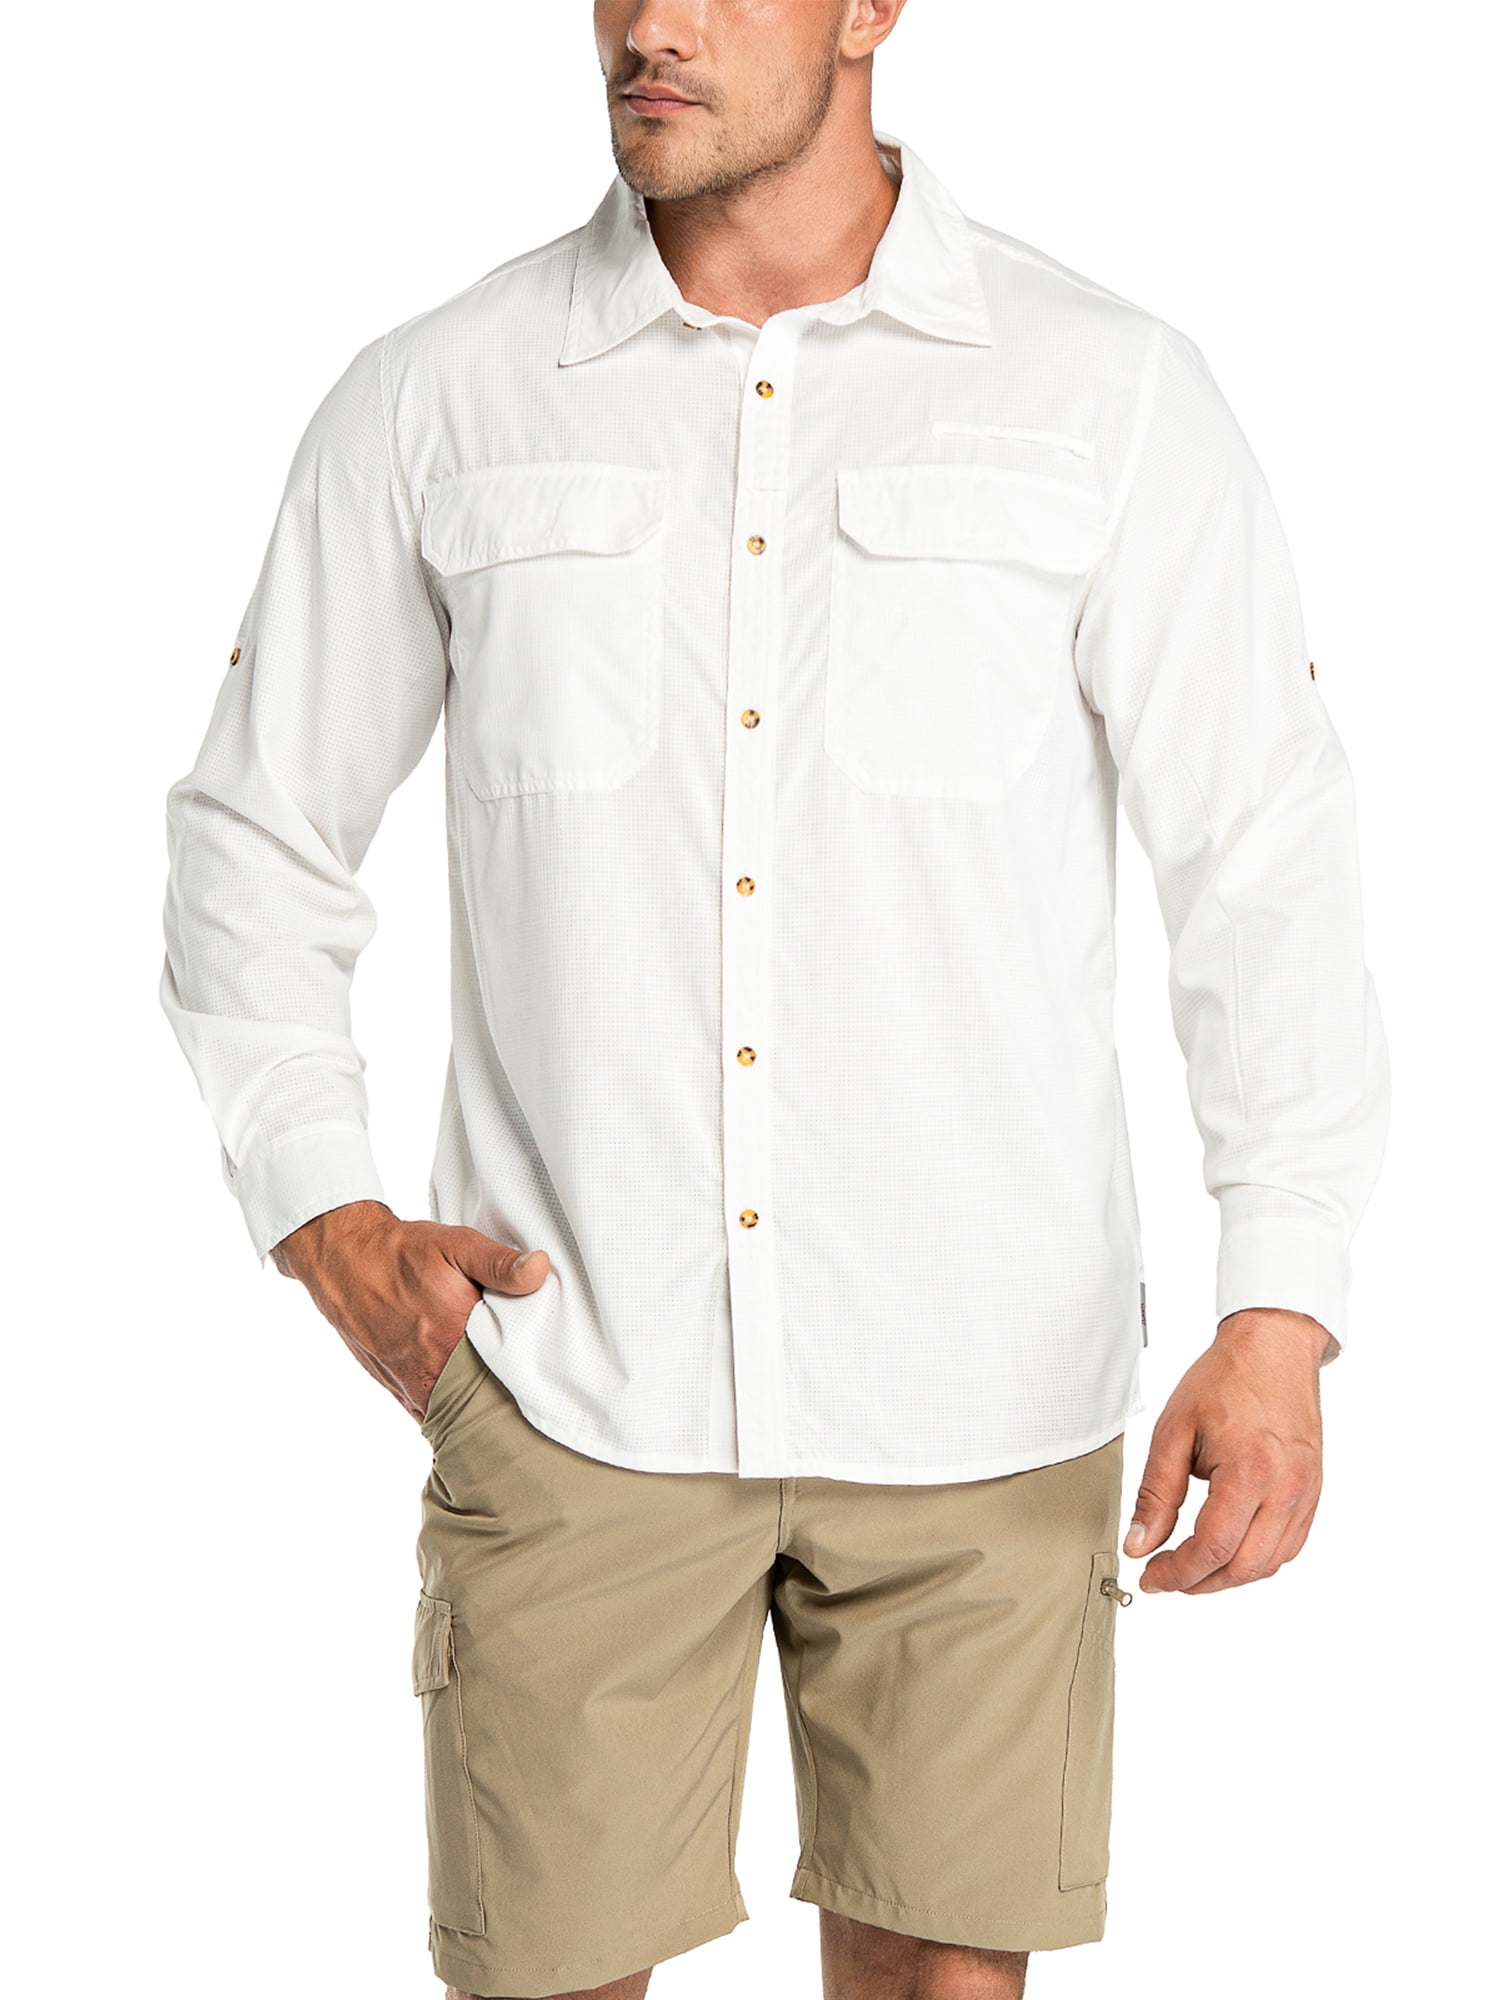 Men's Sun Protection Fishing Shirts Long Sleeve Travel Work Shirts